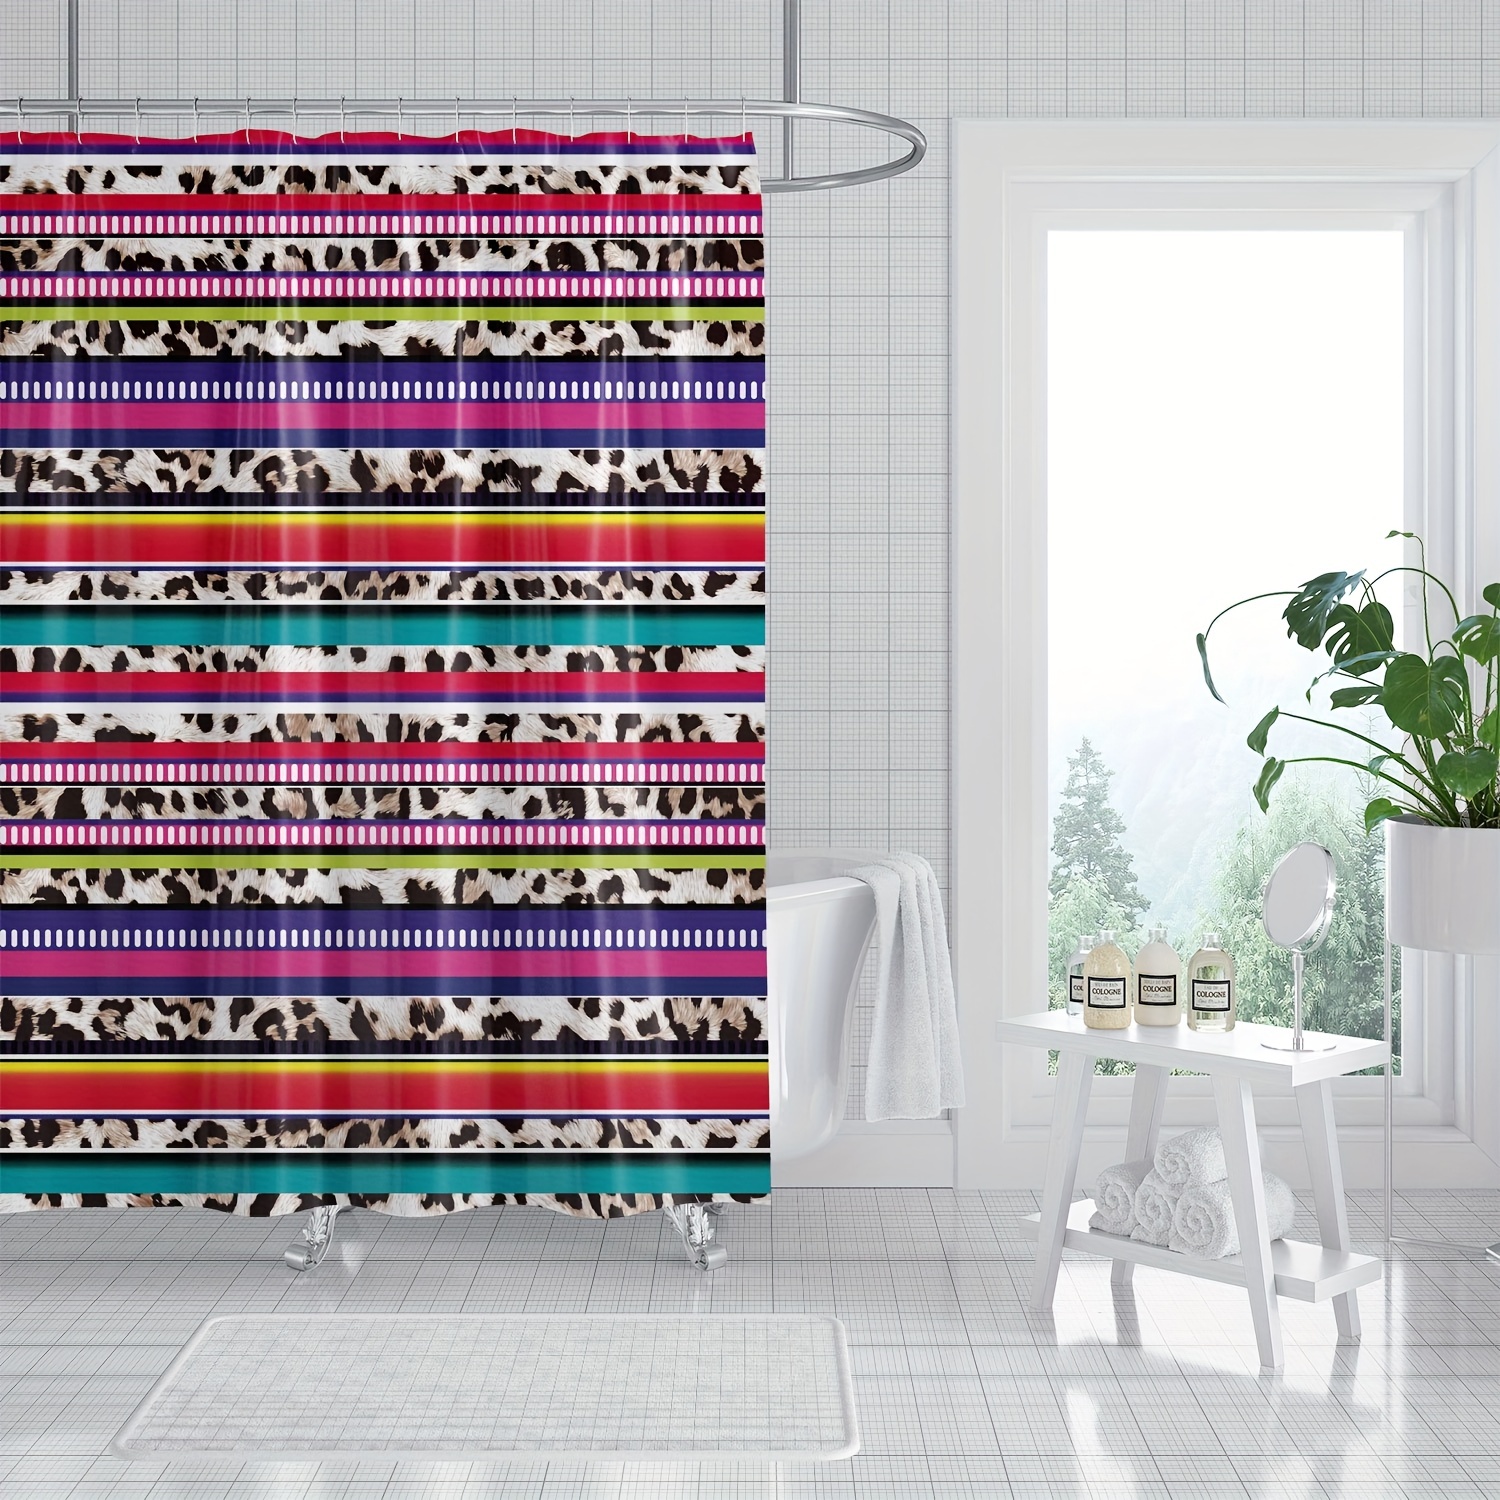 Grunge Brick Wall Texture Bathroom Shower Curtain Liner Waterproof Fabric  Hooks